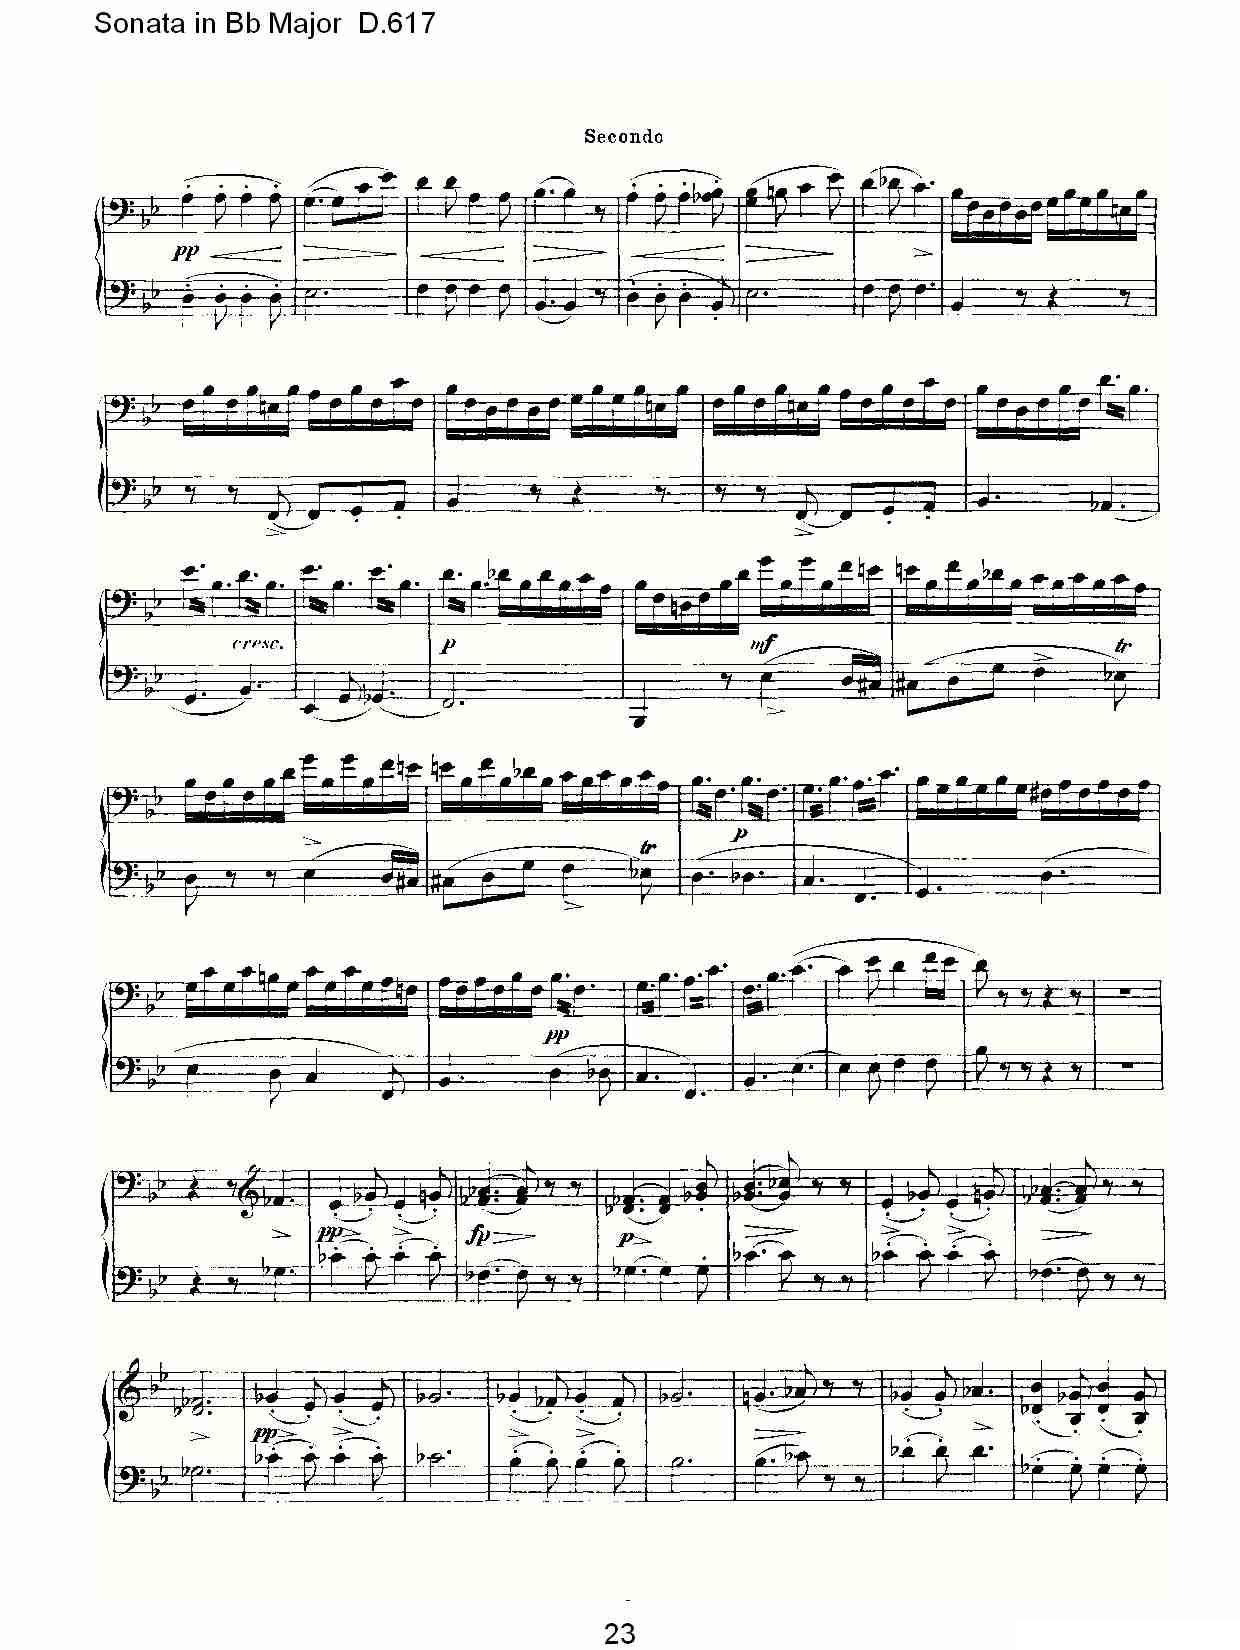 Sonata in Bb Major D.617（Bb大调奏鸣曲 D.617）钢琴曲谱（图23）